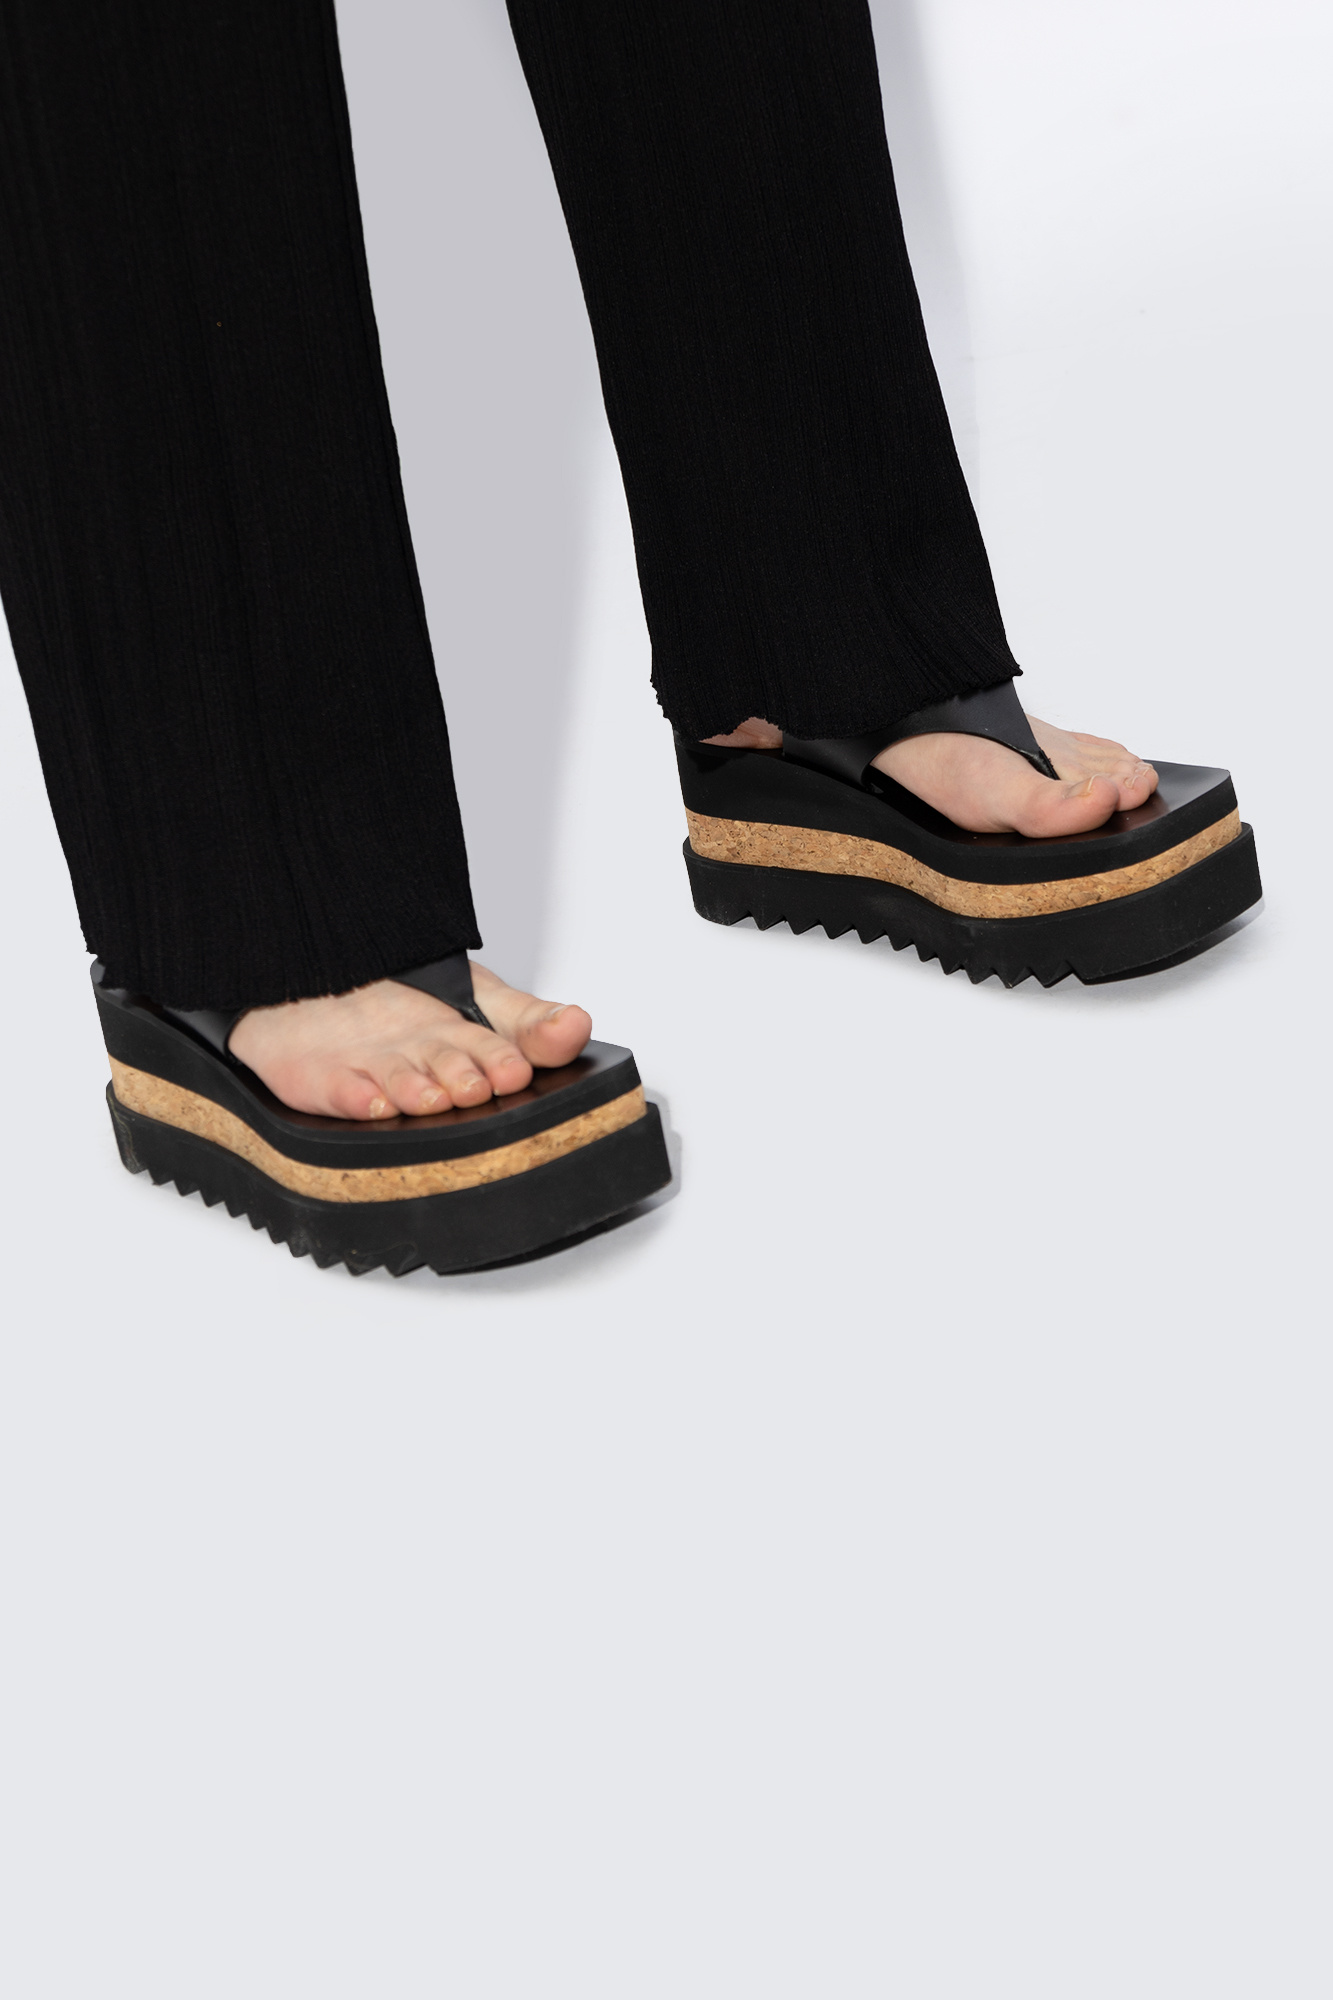 Stella McCartney ‘Sneak-Elyse’ platform flip-flops